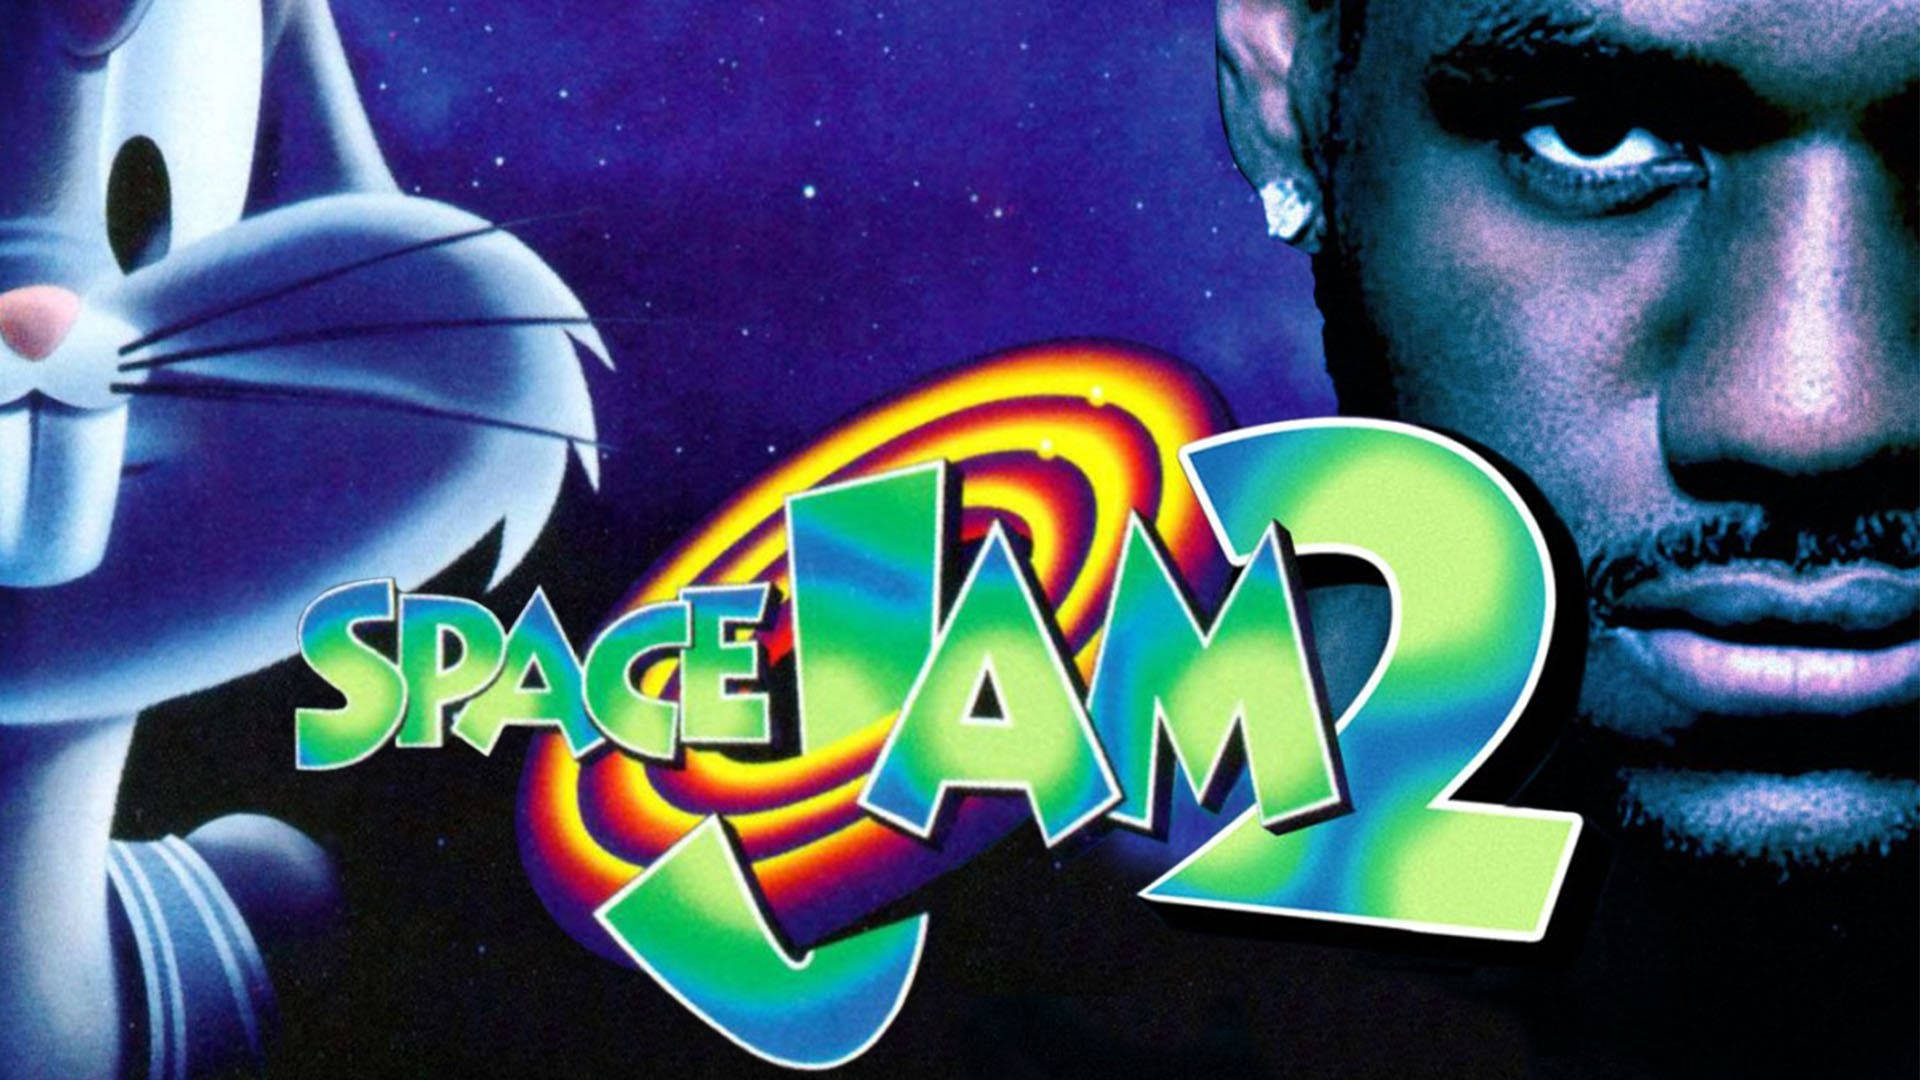 Space Jam 2 Poster Wallpaper